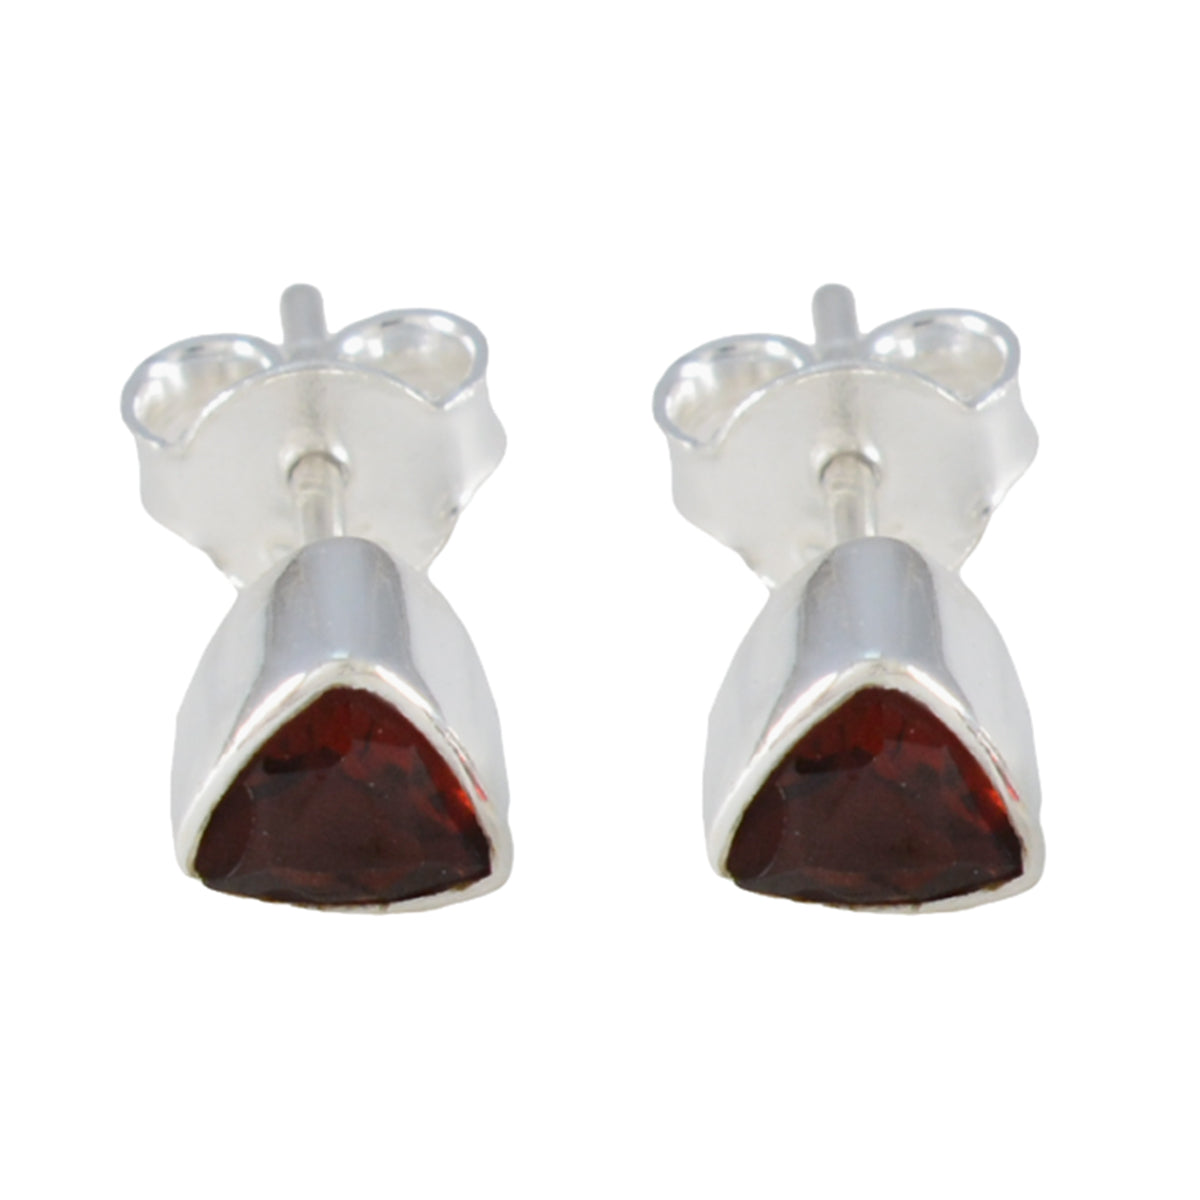 Riyo Atemberaubender 925er Sterlingsilber-Ohrring für Demoiselle-Granat-Ohrring mit Lünettenfassung, roter Ohrring-Ohrstecker